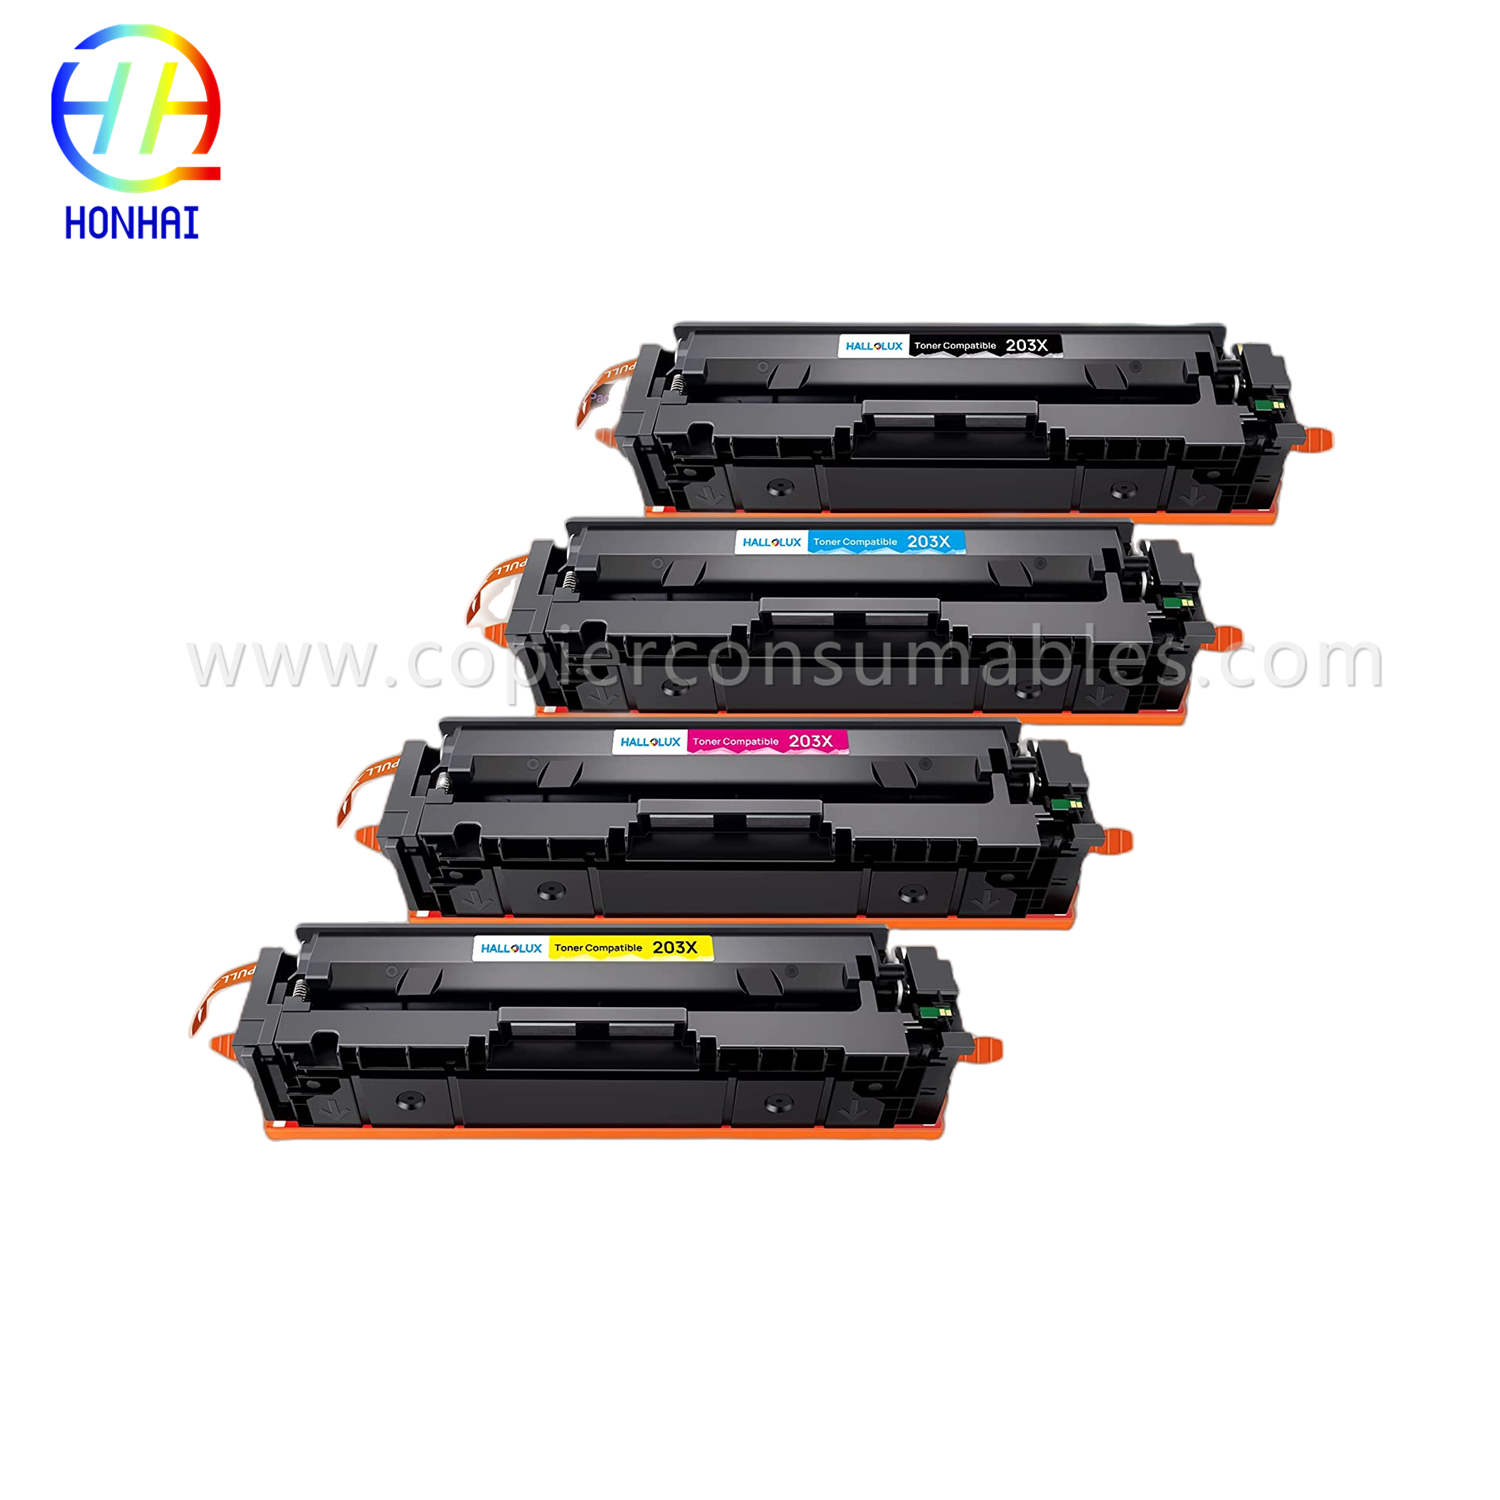 https://www.copierhonhaitech.com/toner-cartridge-for-hp-colour-laserjet-pro-m254dn-m254dw-m254nw-m280nw-m281cdw-m281fdn-m281fdw-203a-cf543/